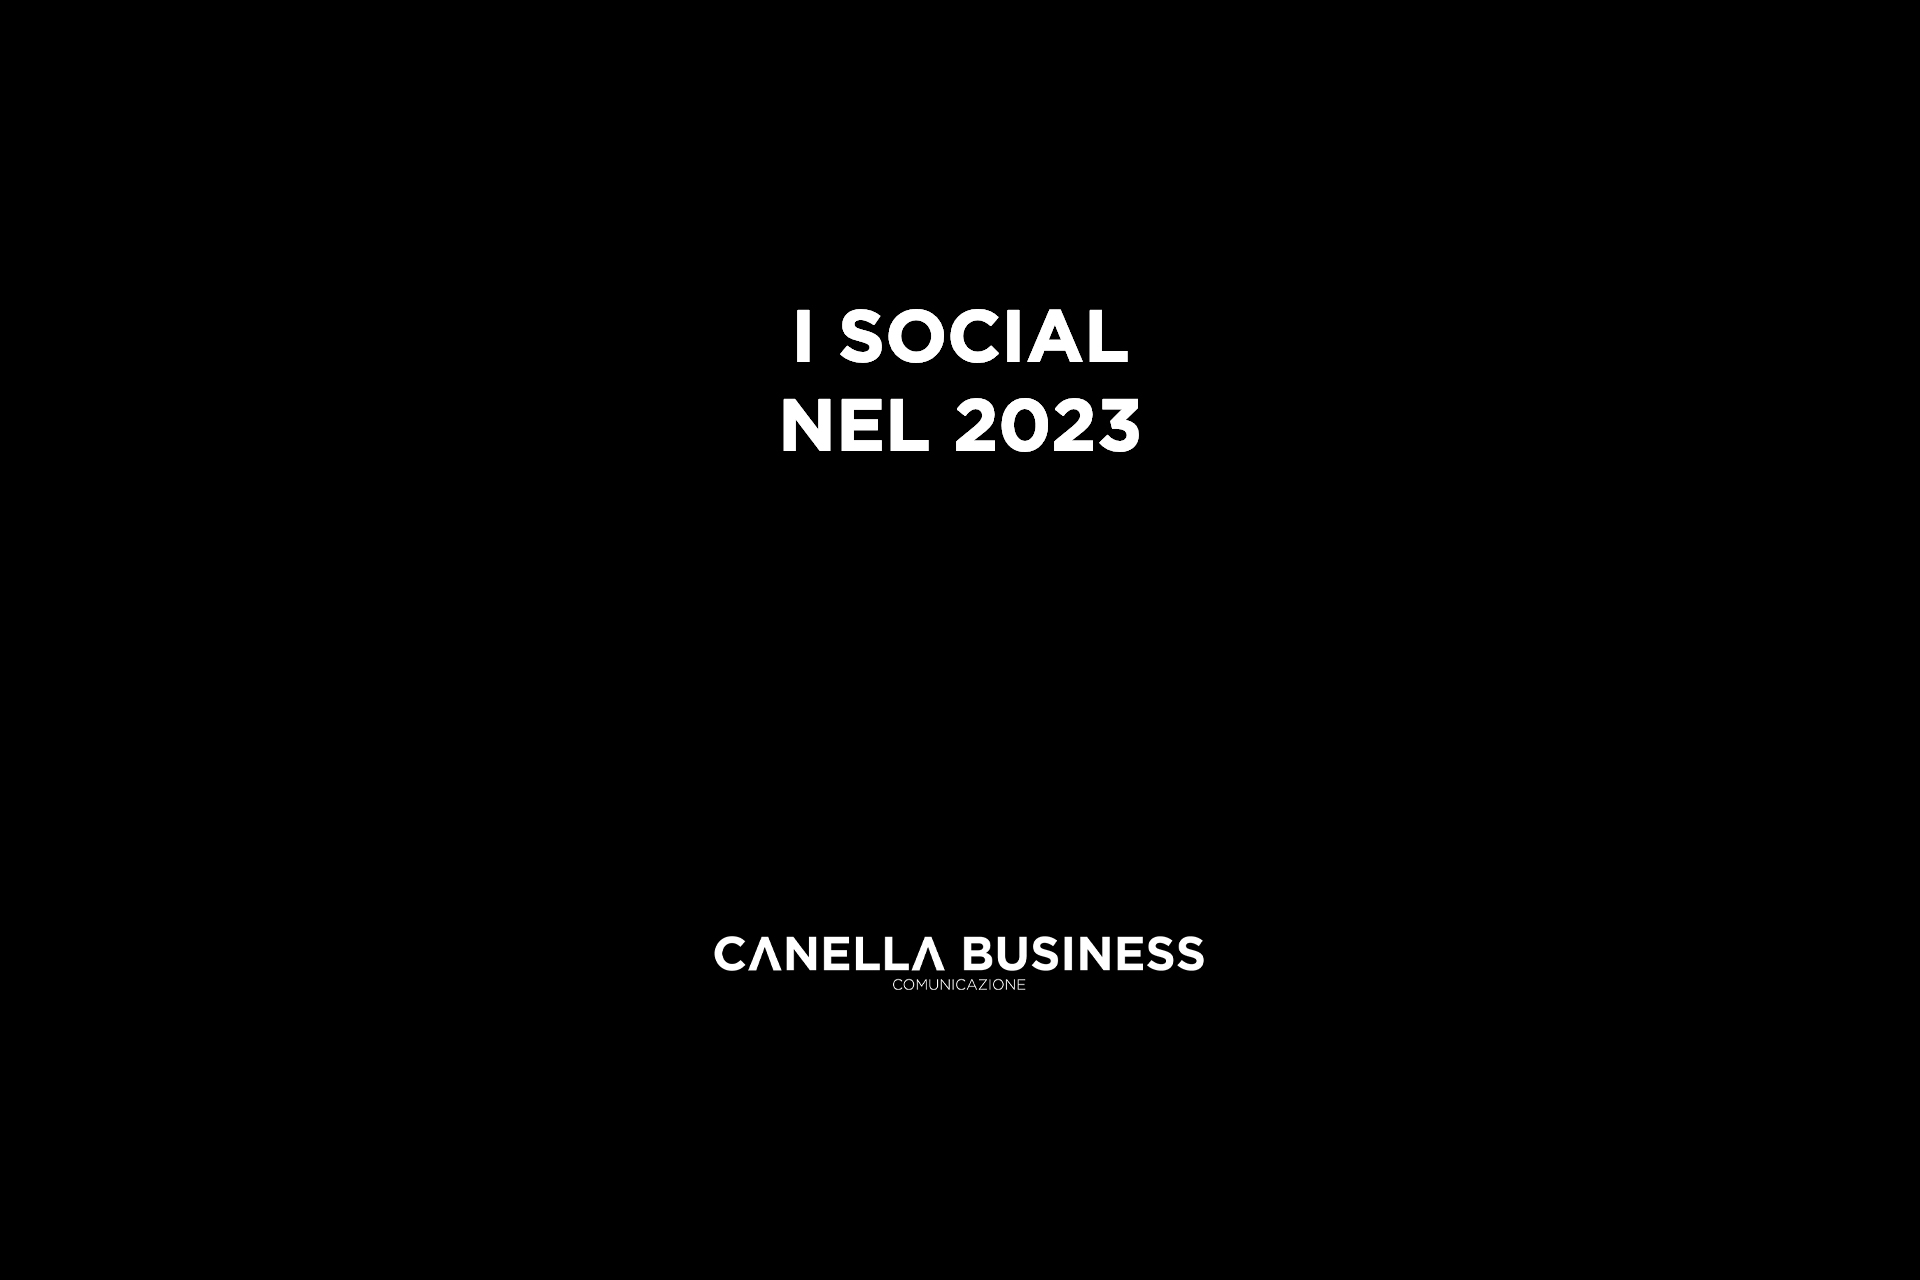 I social nel 2023